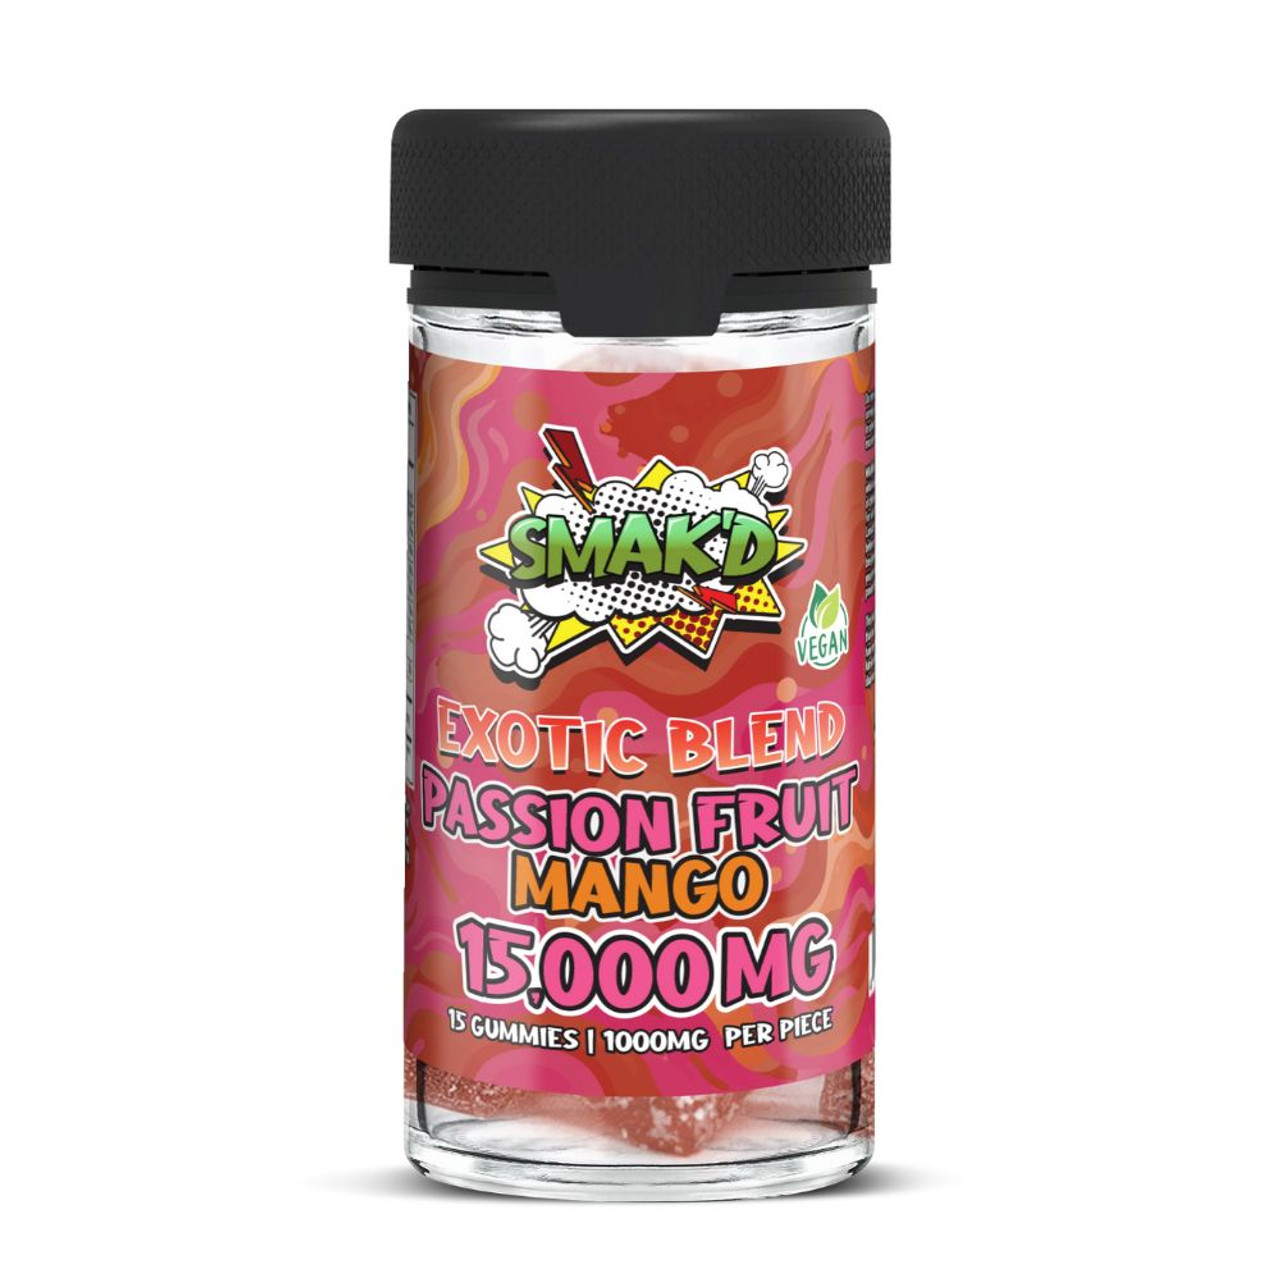 SMAK'D Exotic Blend 15,000mg Gummies - 15 ct. Jar